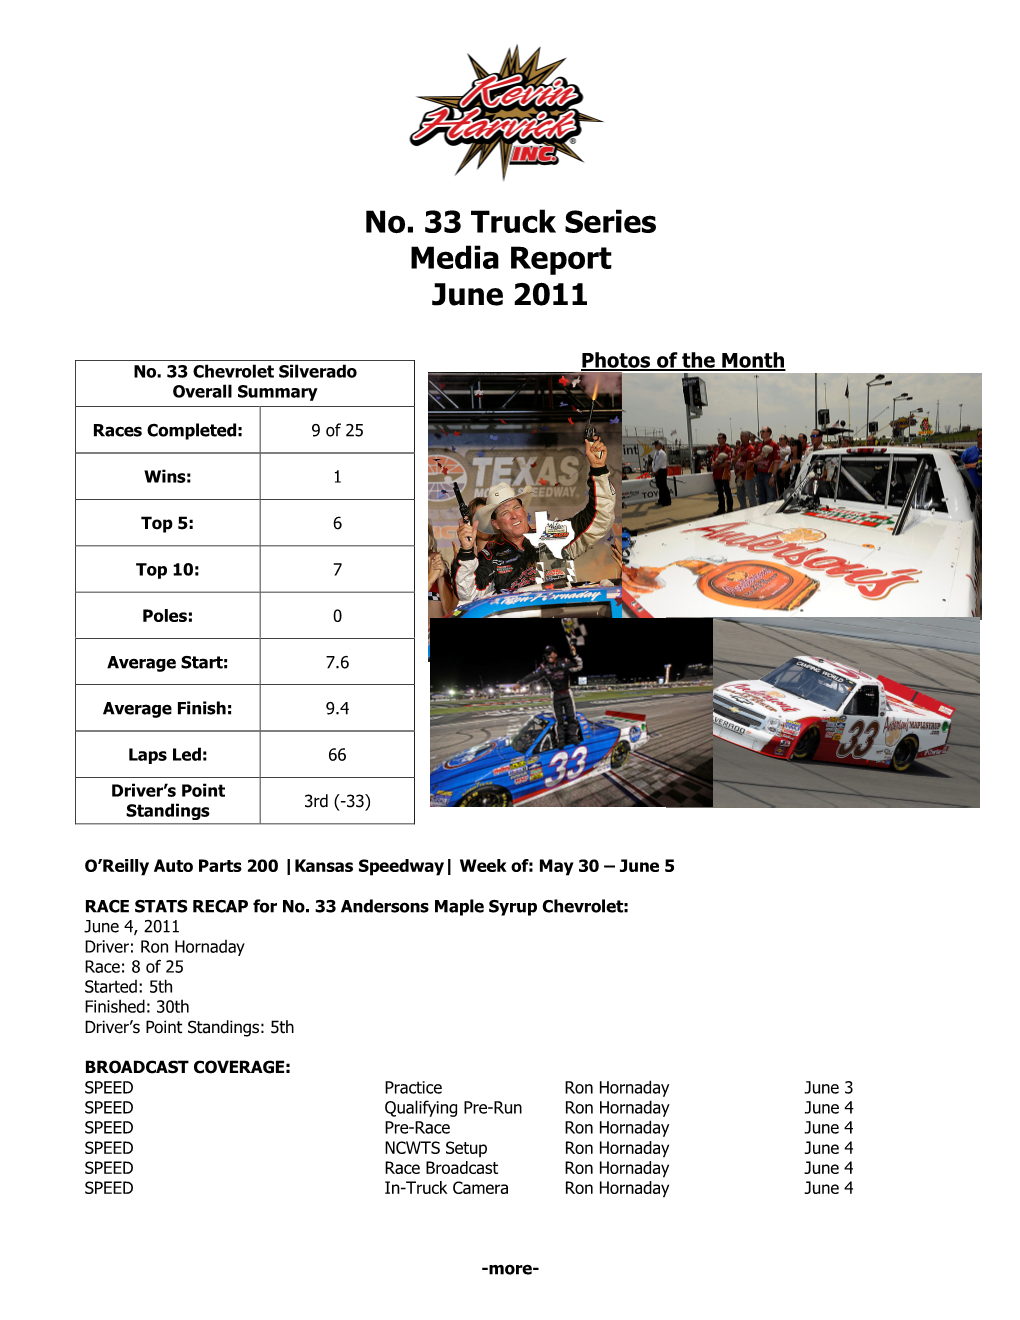 No. 33 Truck Series Media Report June 2011